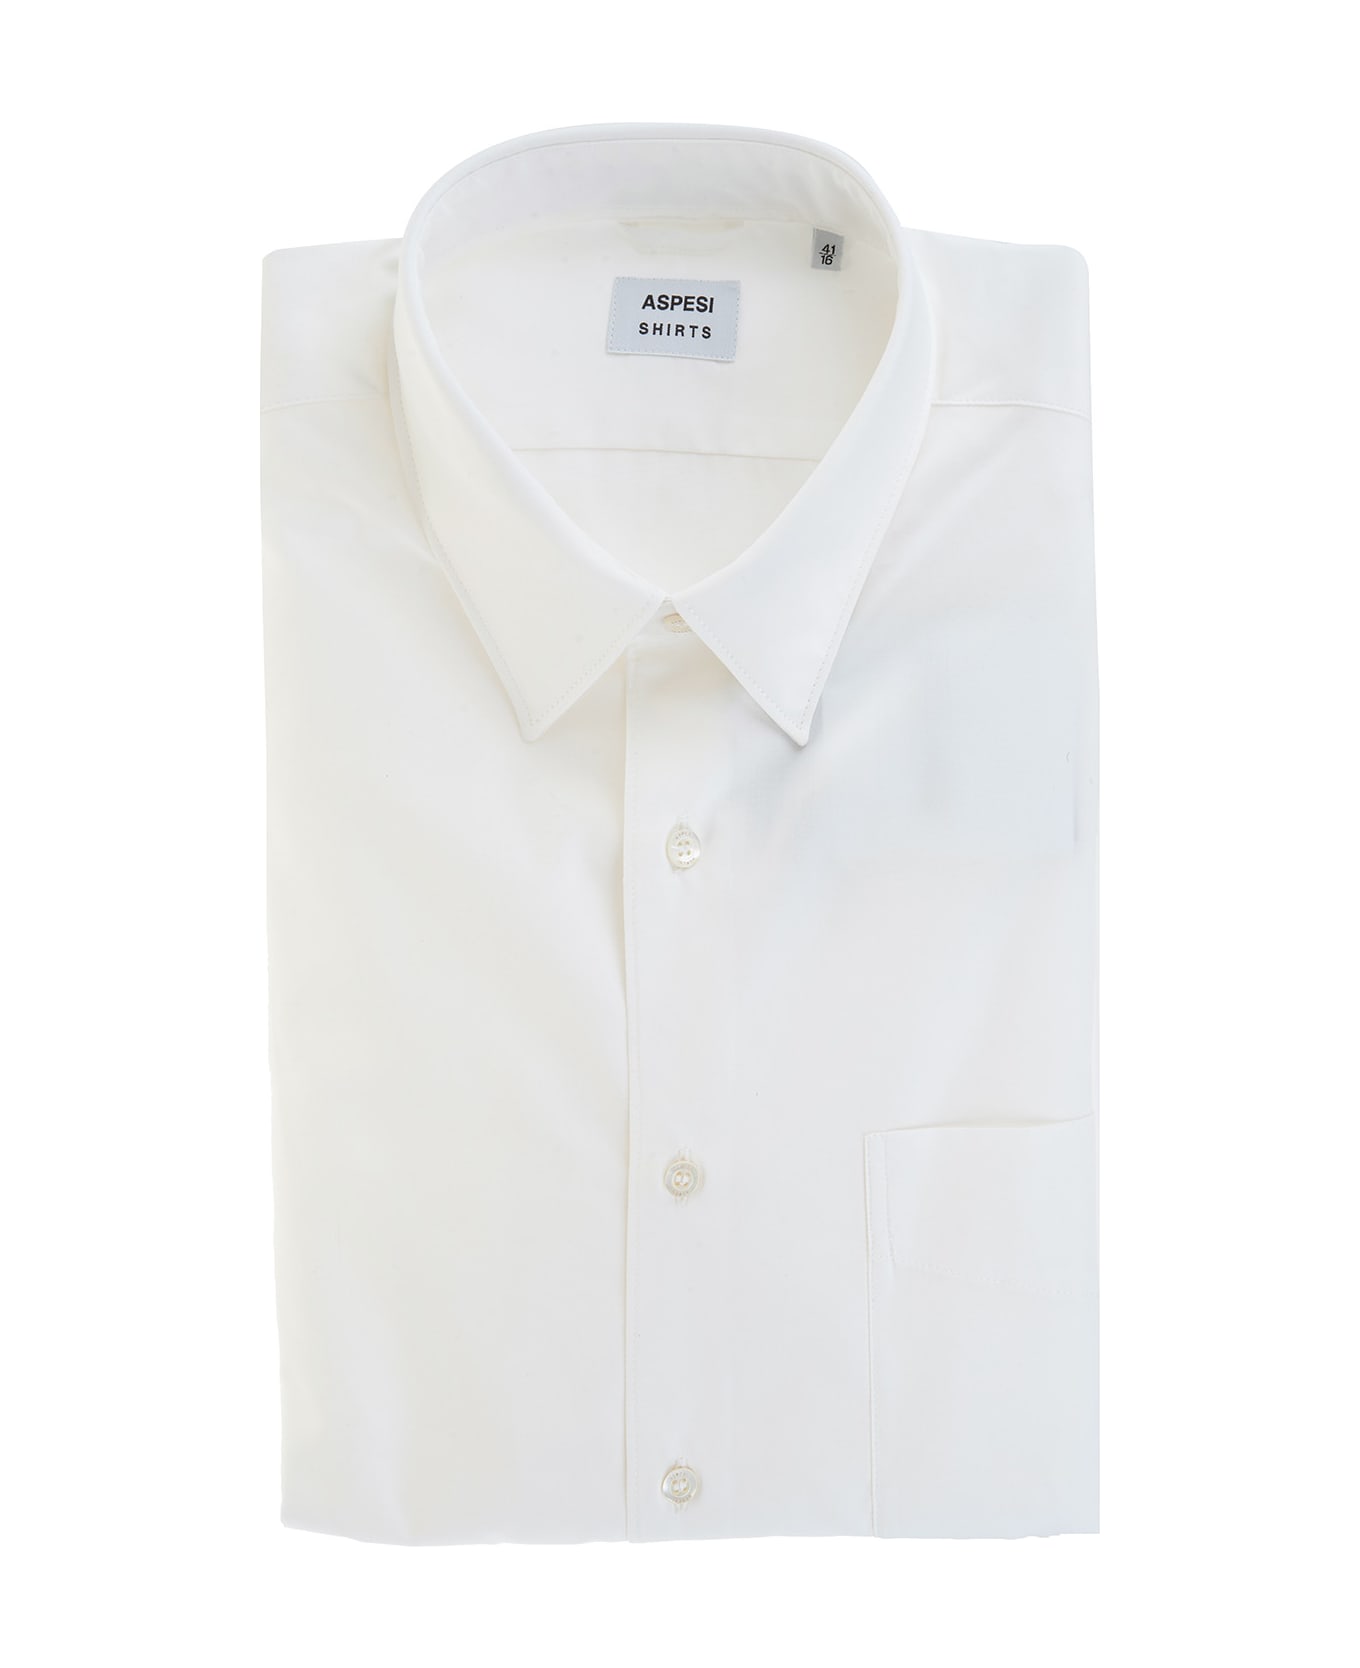 Aspesi Classic Shirt In White Cotton Poplin - White